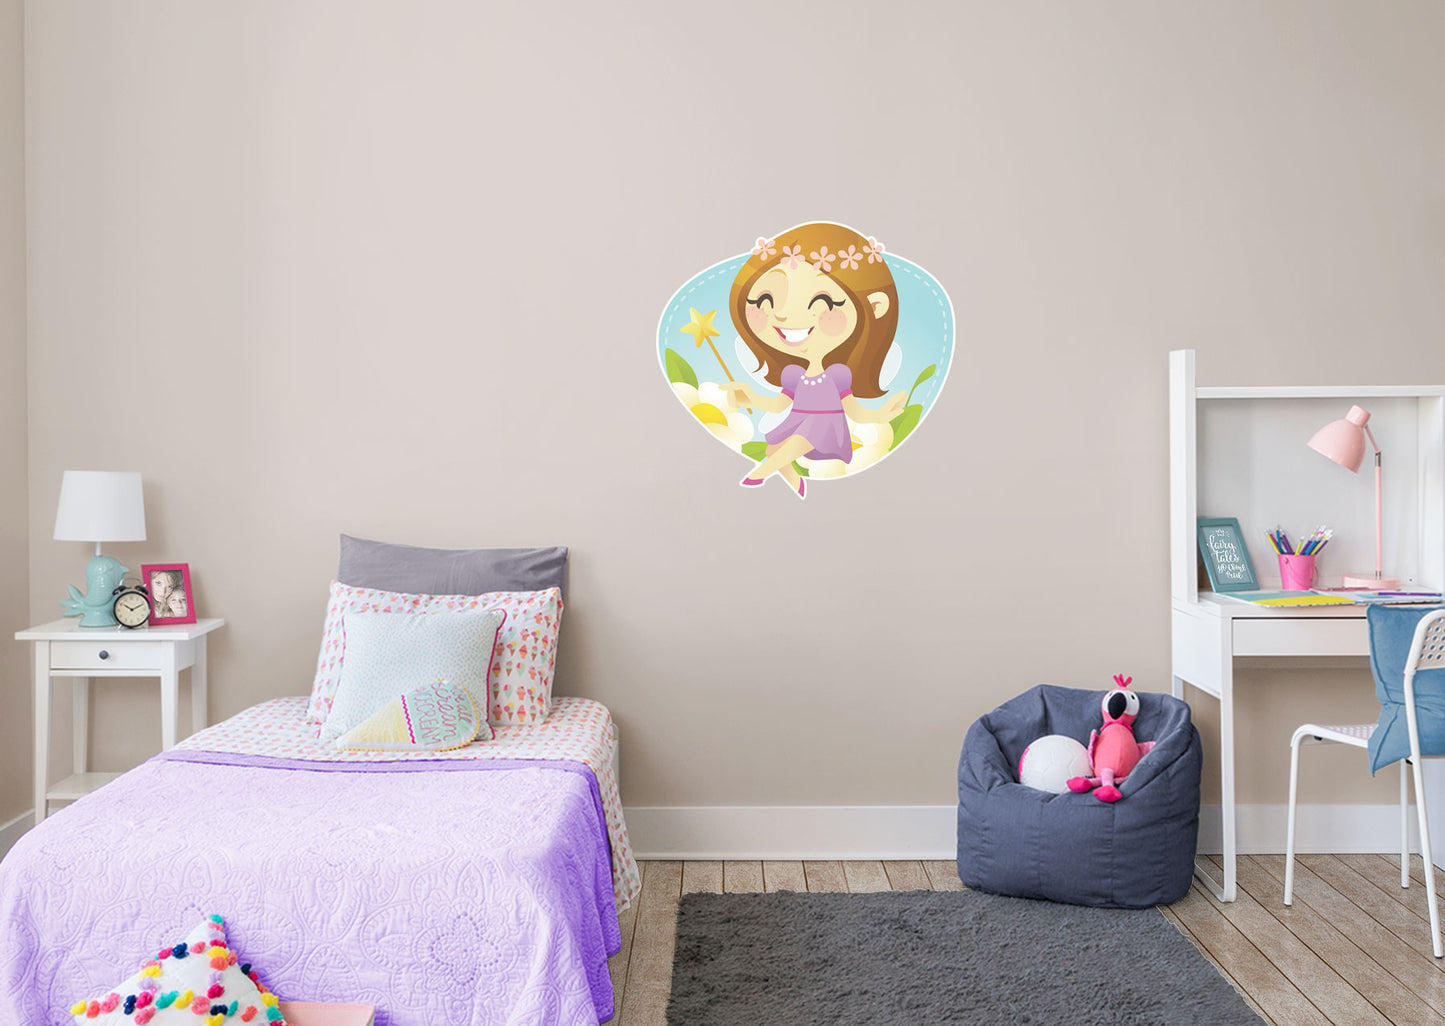 Nursery:  Joy Icon        -   Removable     Adhesive Decal